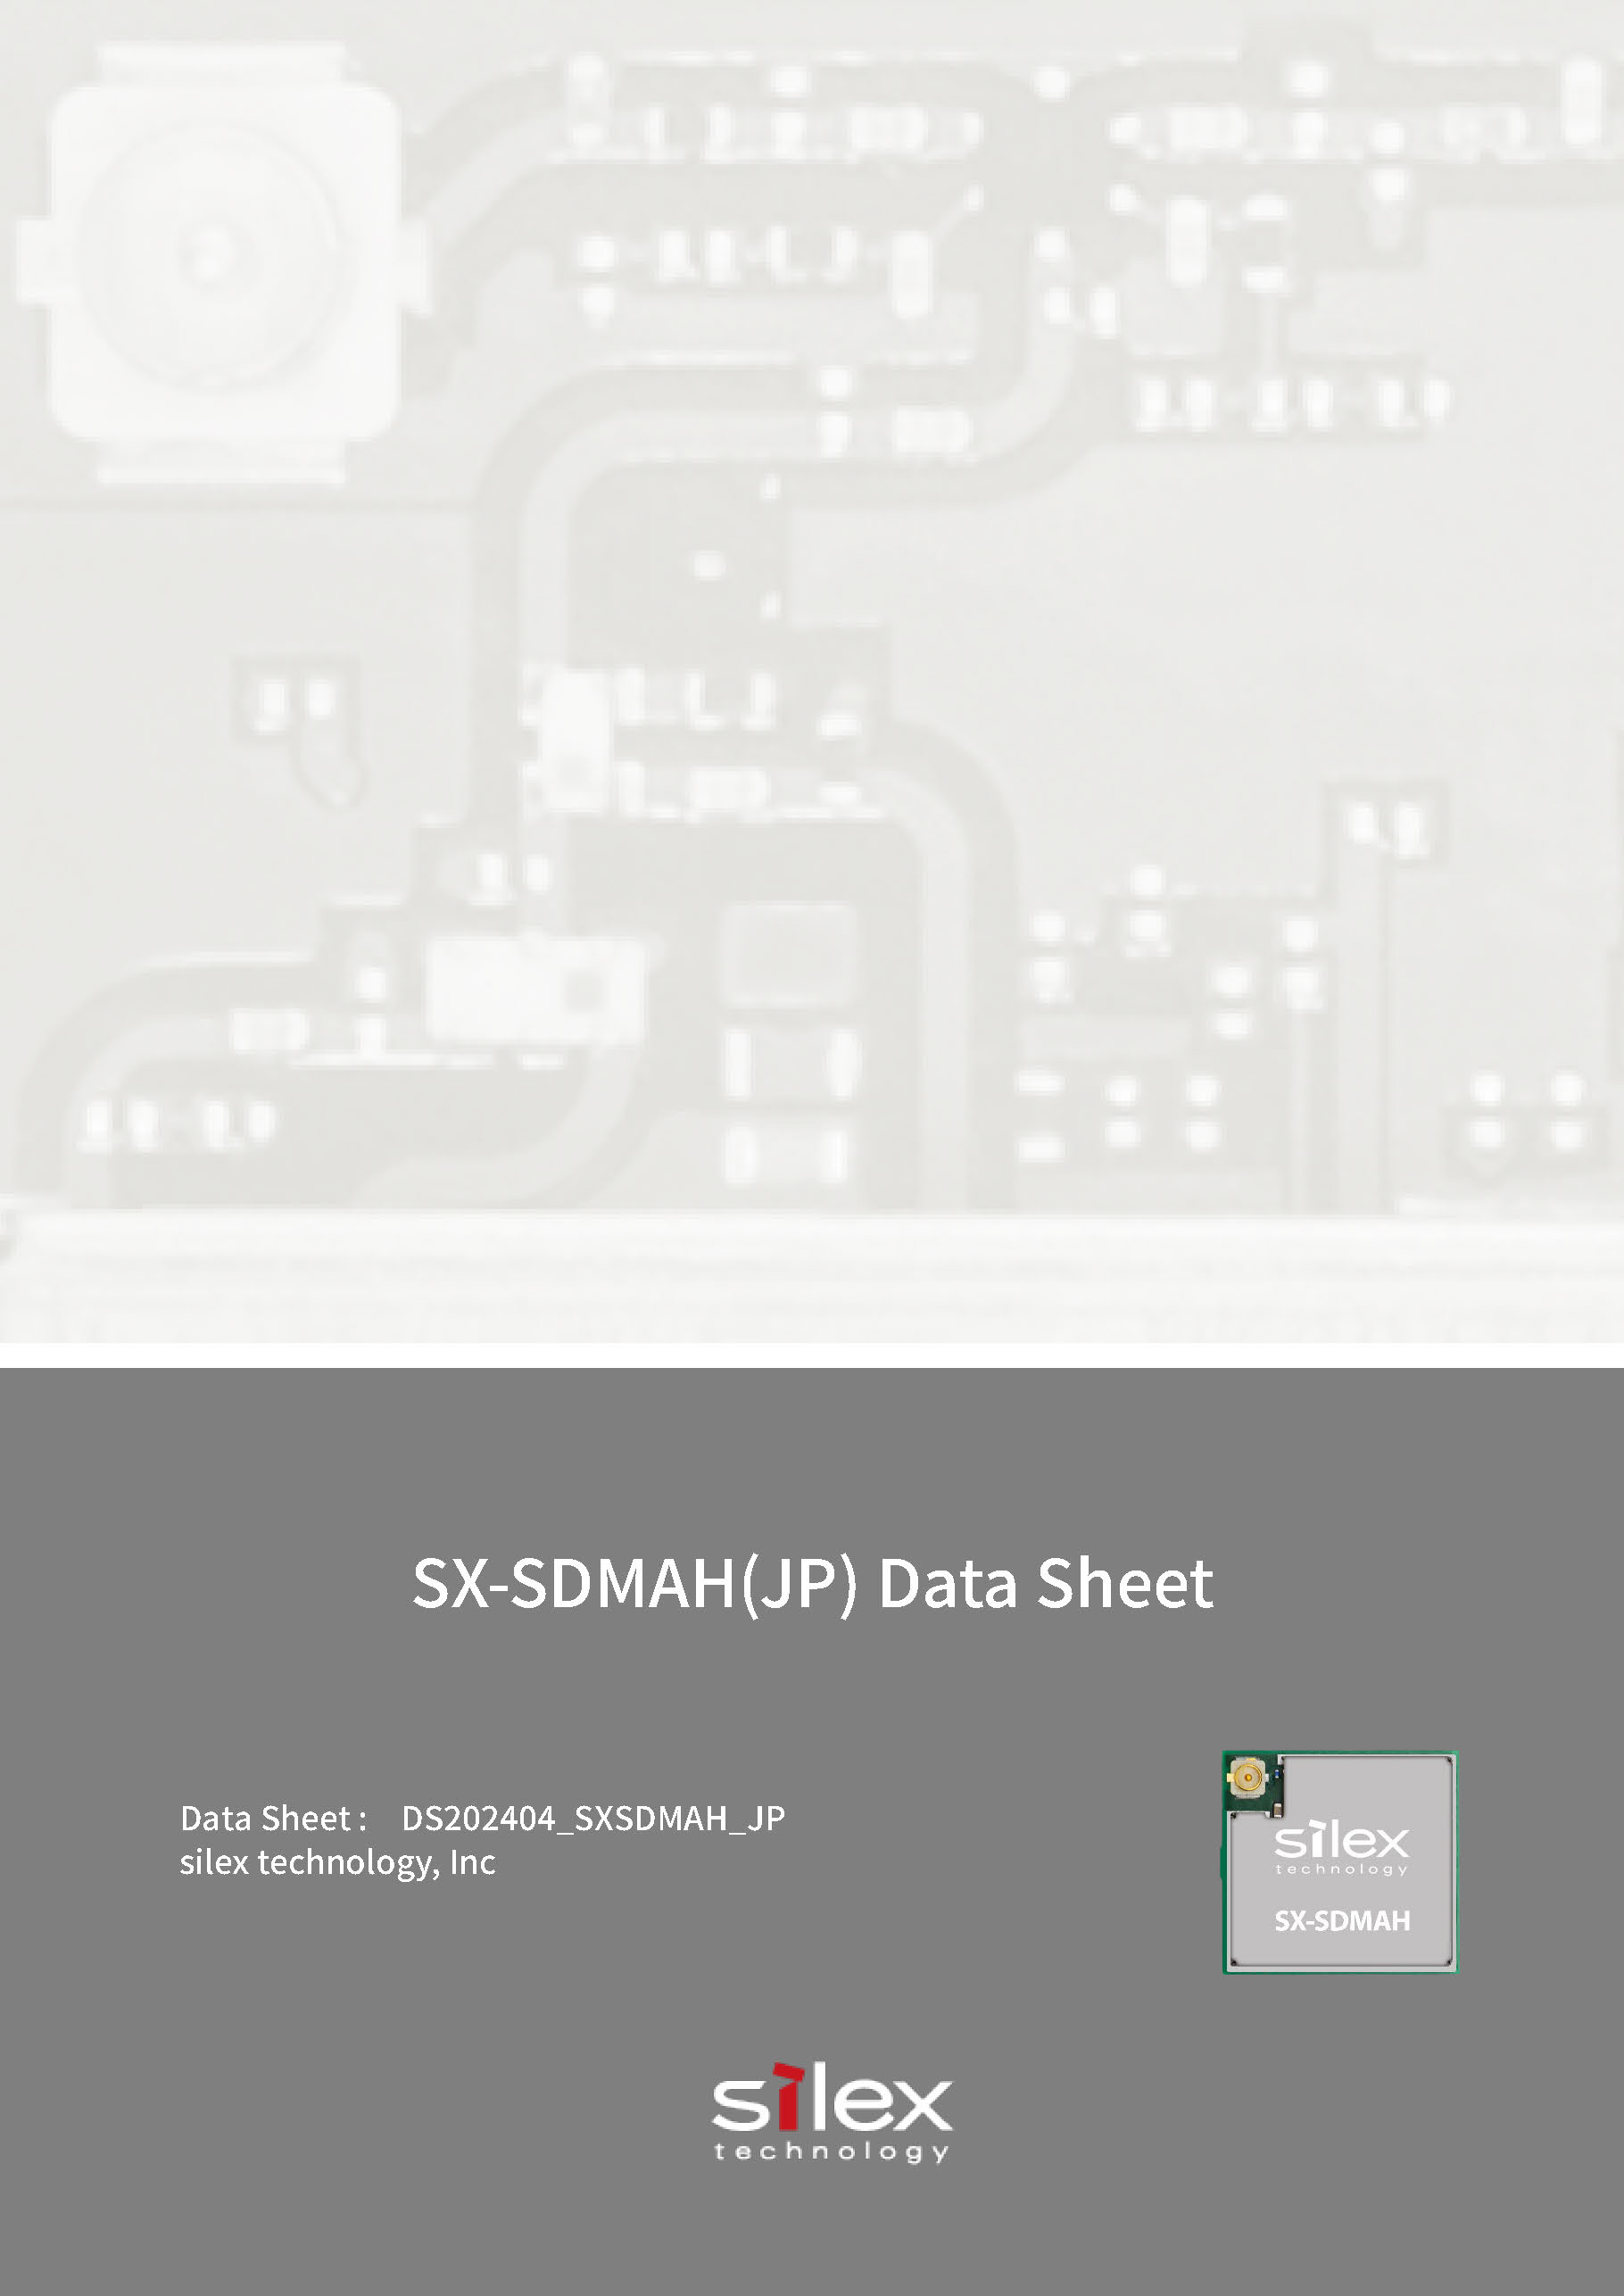 DS202404_SX-SDMAH_JP_DataSheet.jpg